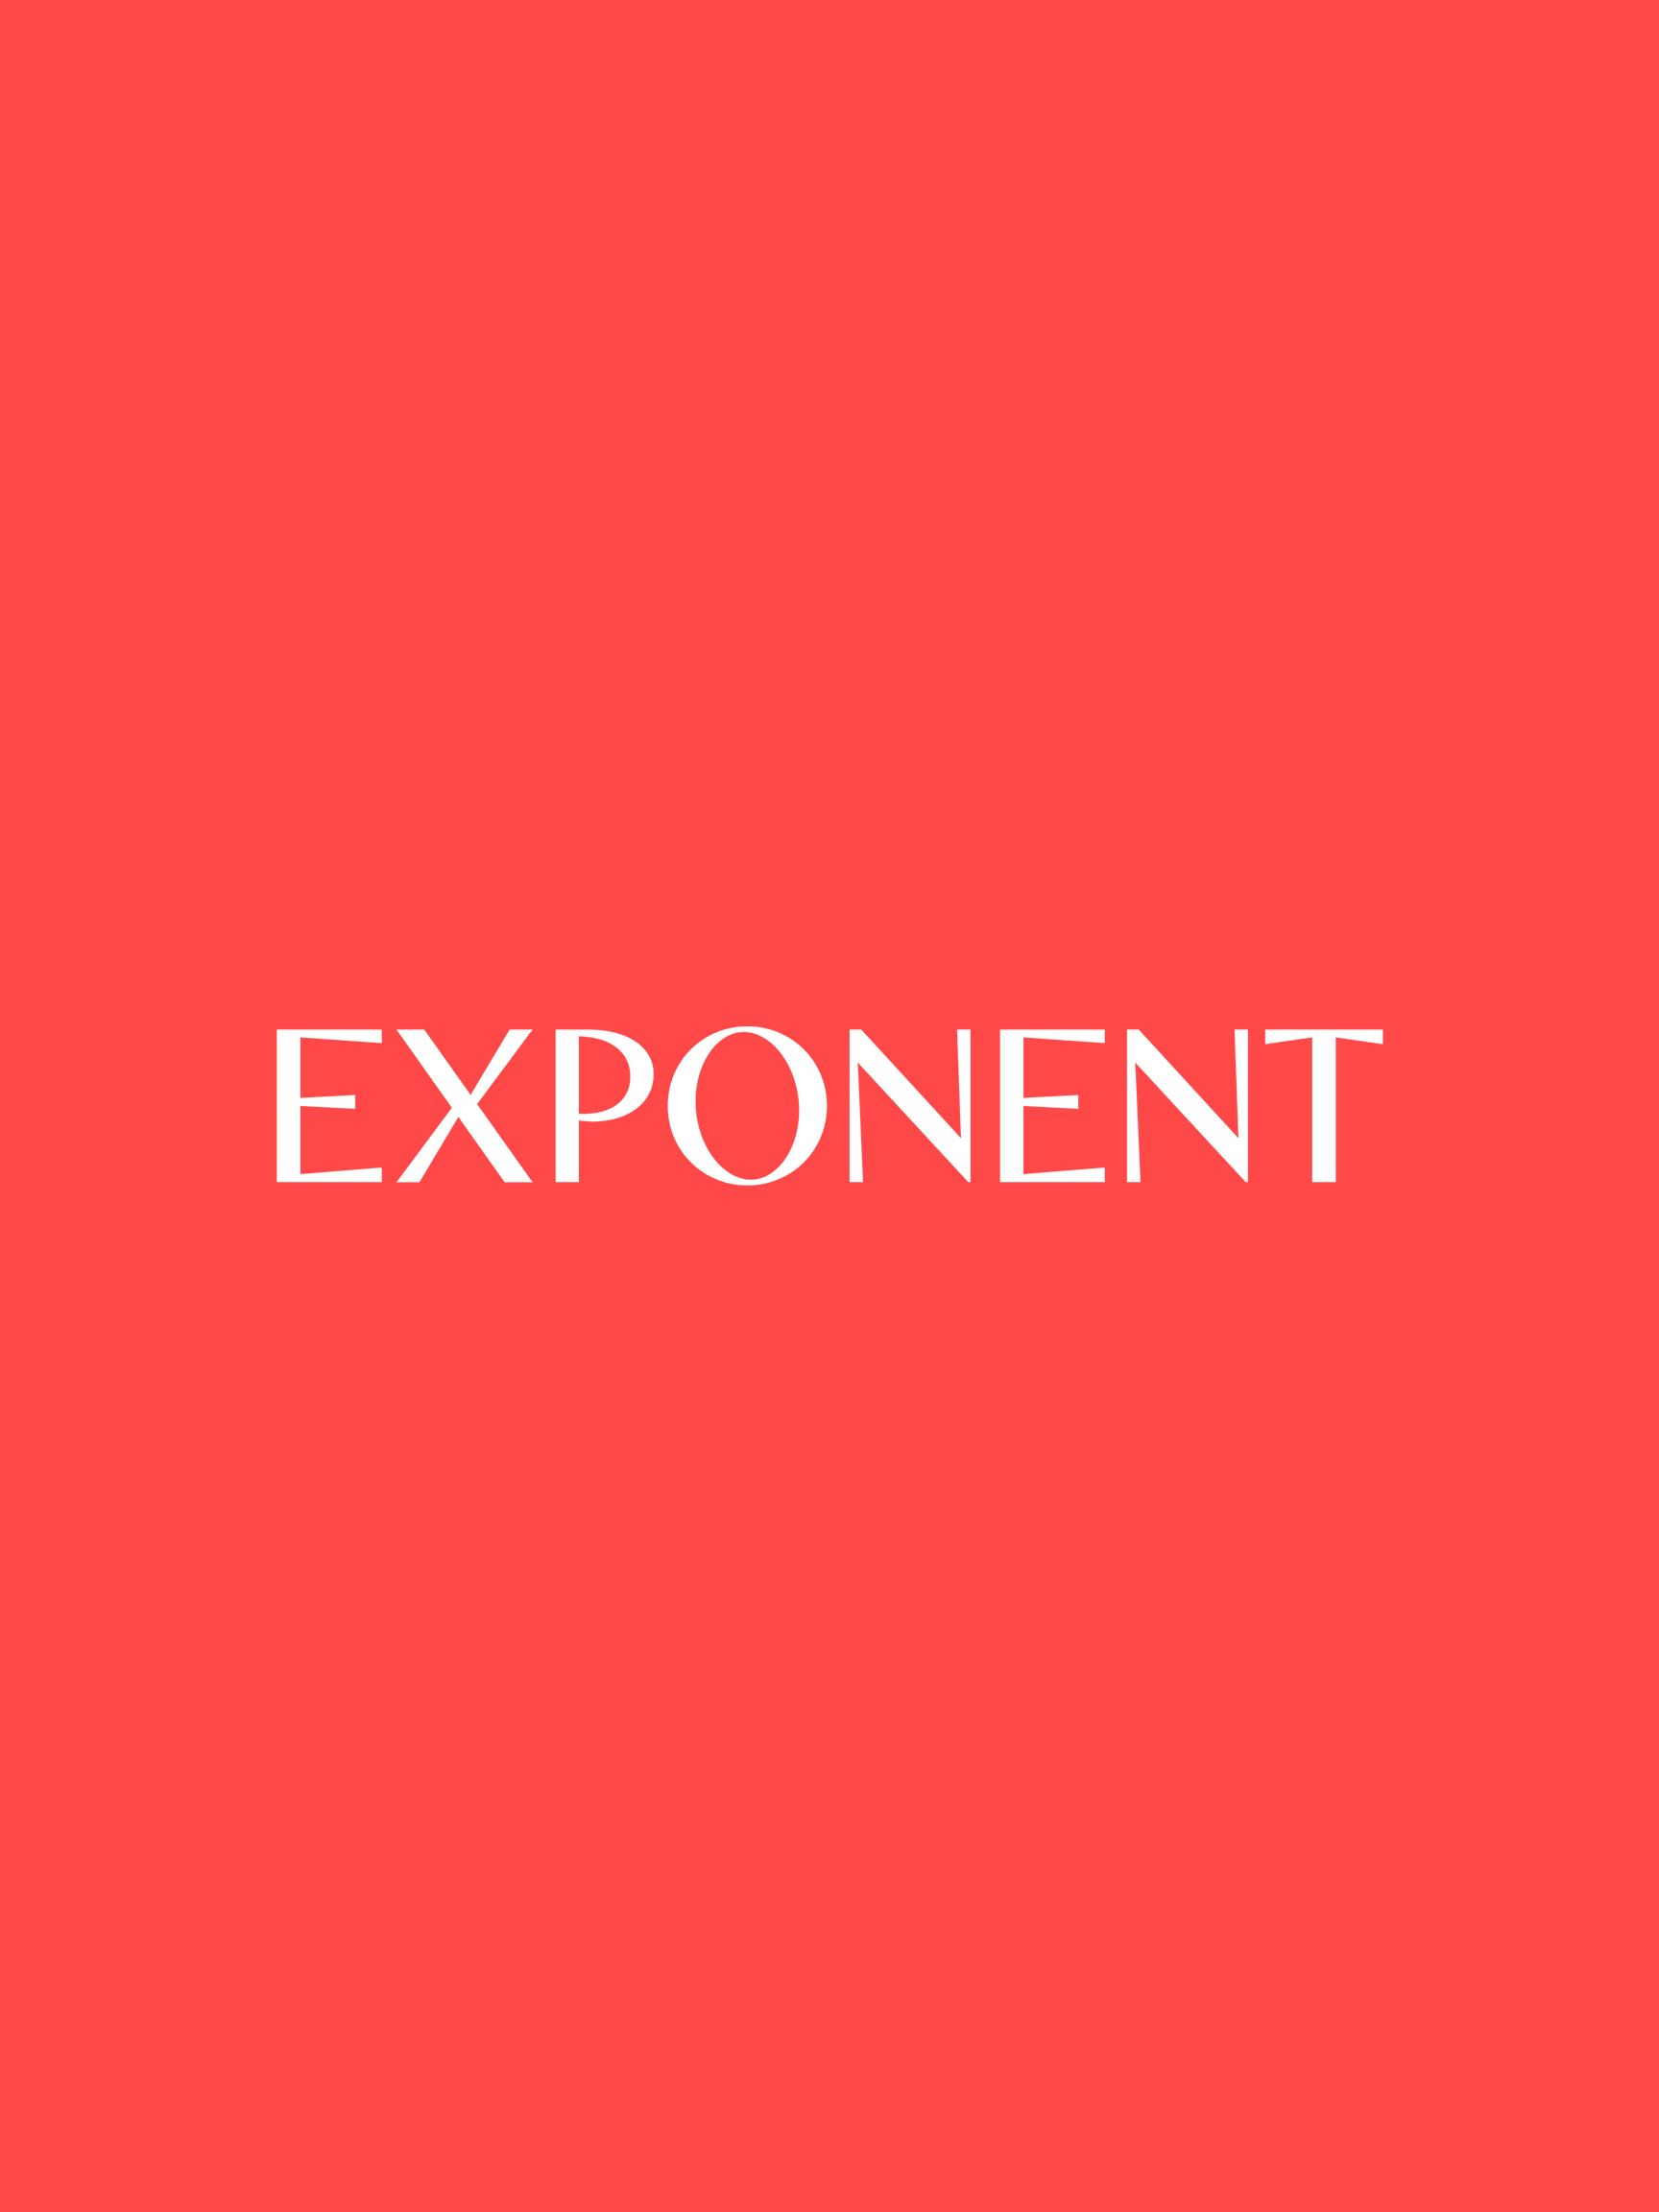 Exponent logo 2x